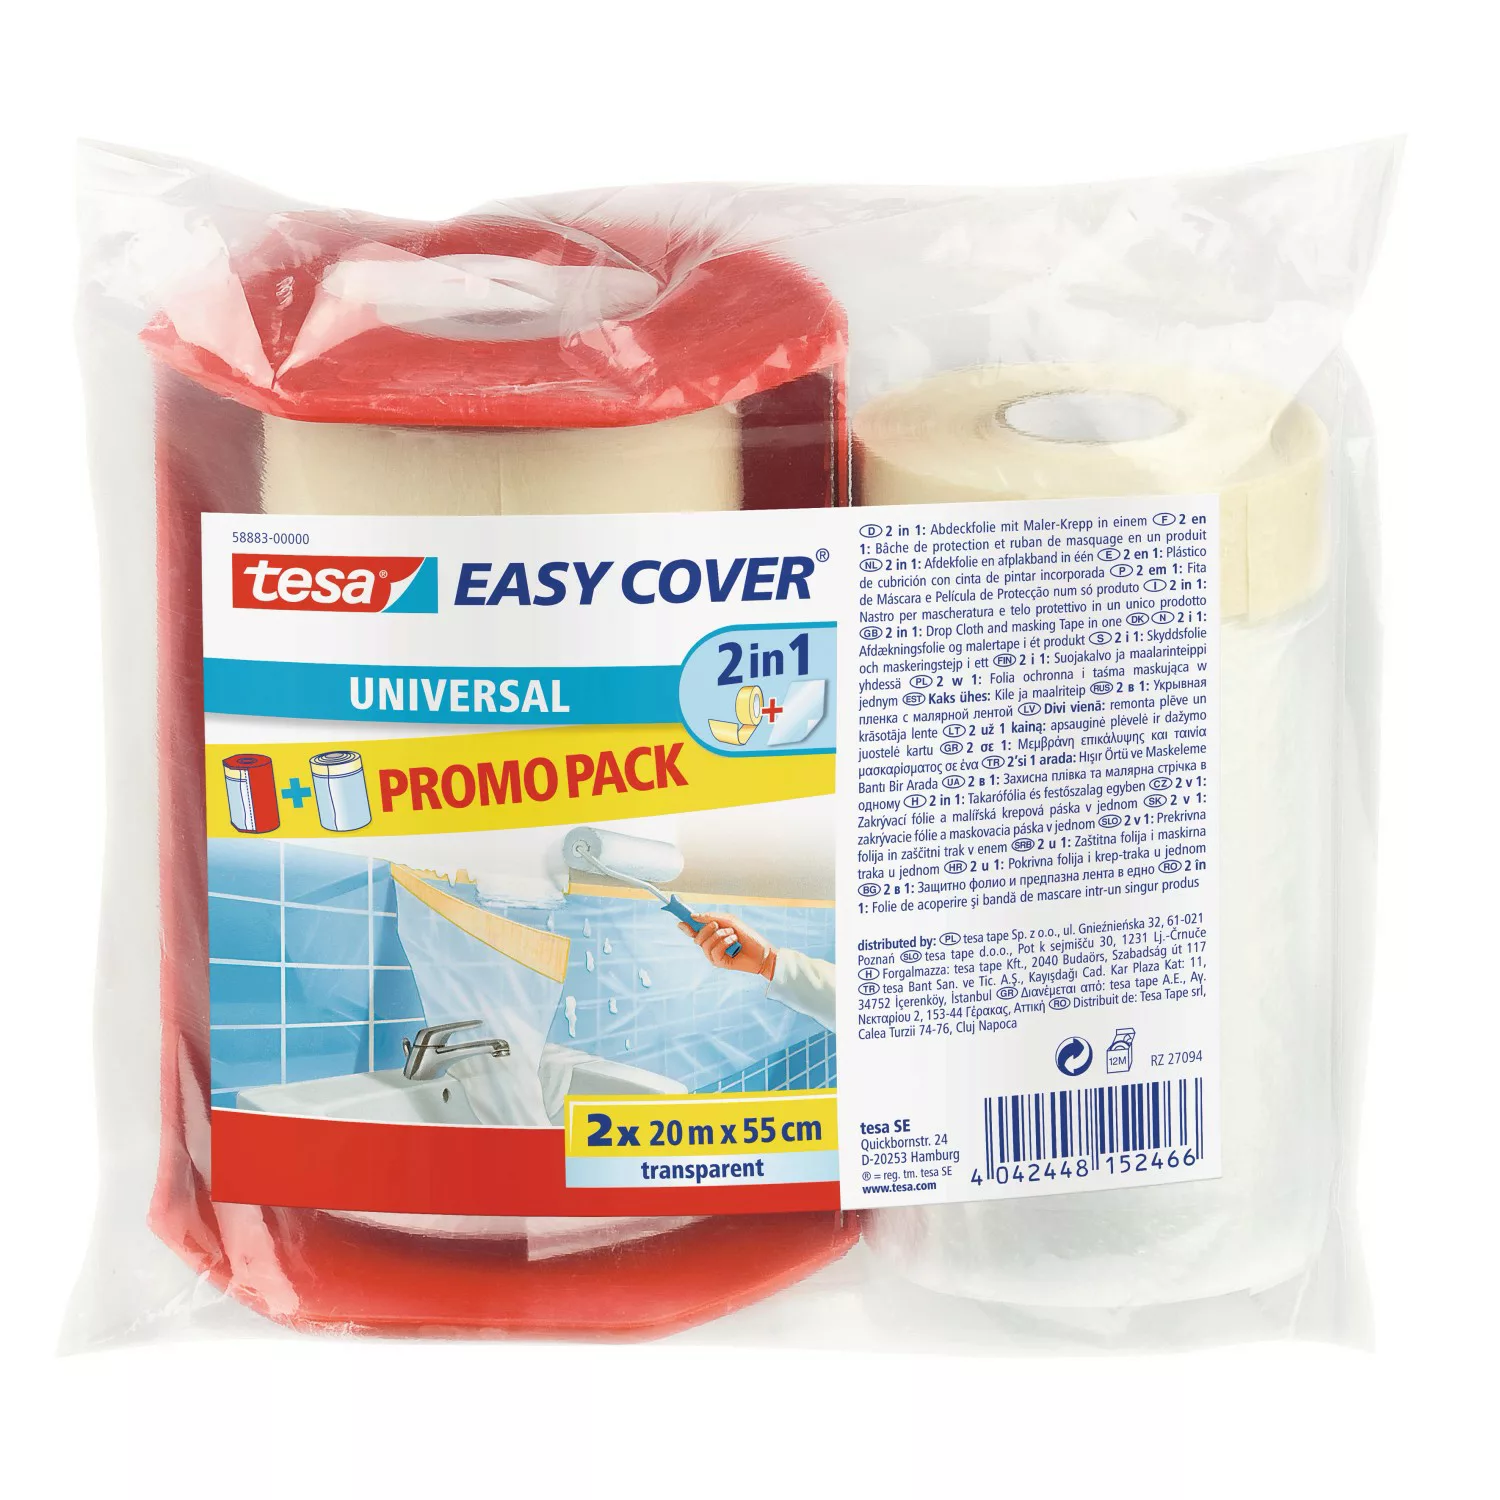 Tesa Easy Cover Universal Transparent Promo Pack 20 m x 55 cm 2 Stück günstig online kaufen